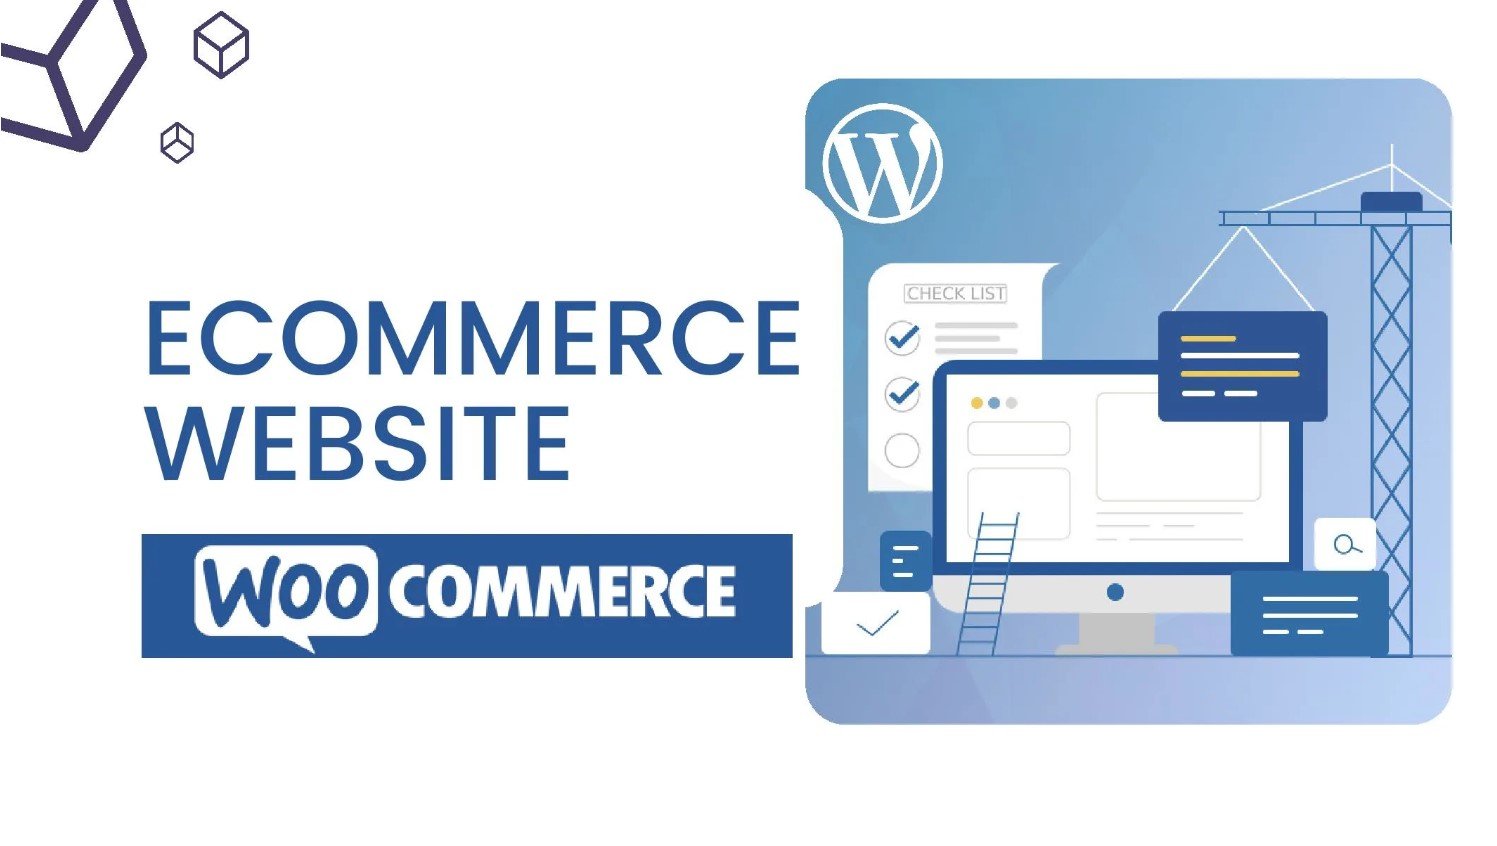 I will build wordpress ecommerce website using woocommerce, online store